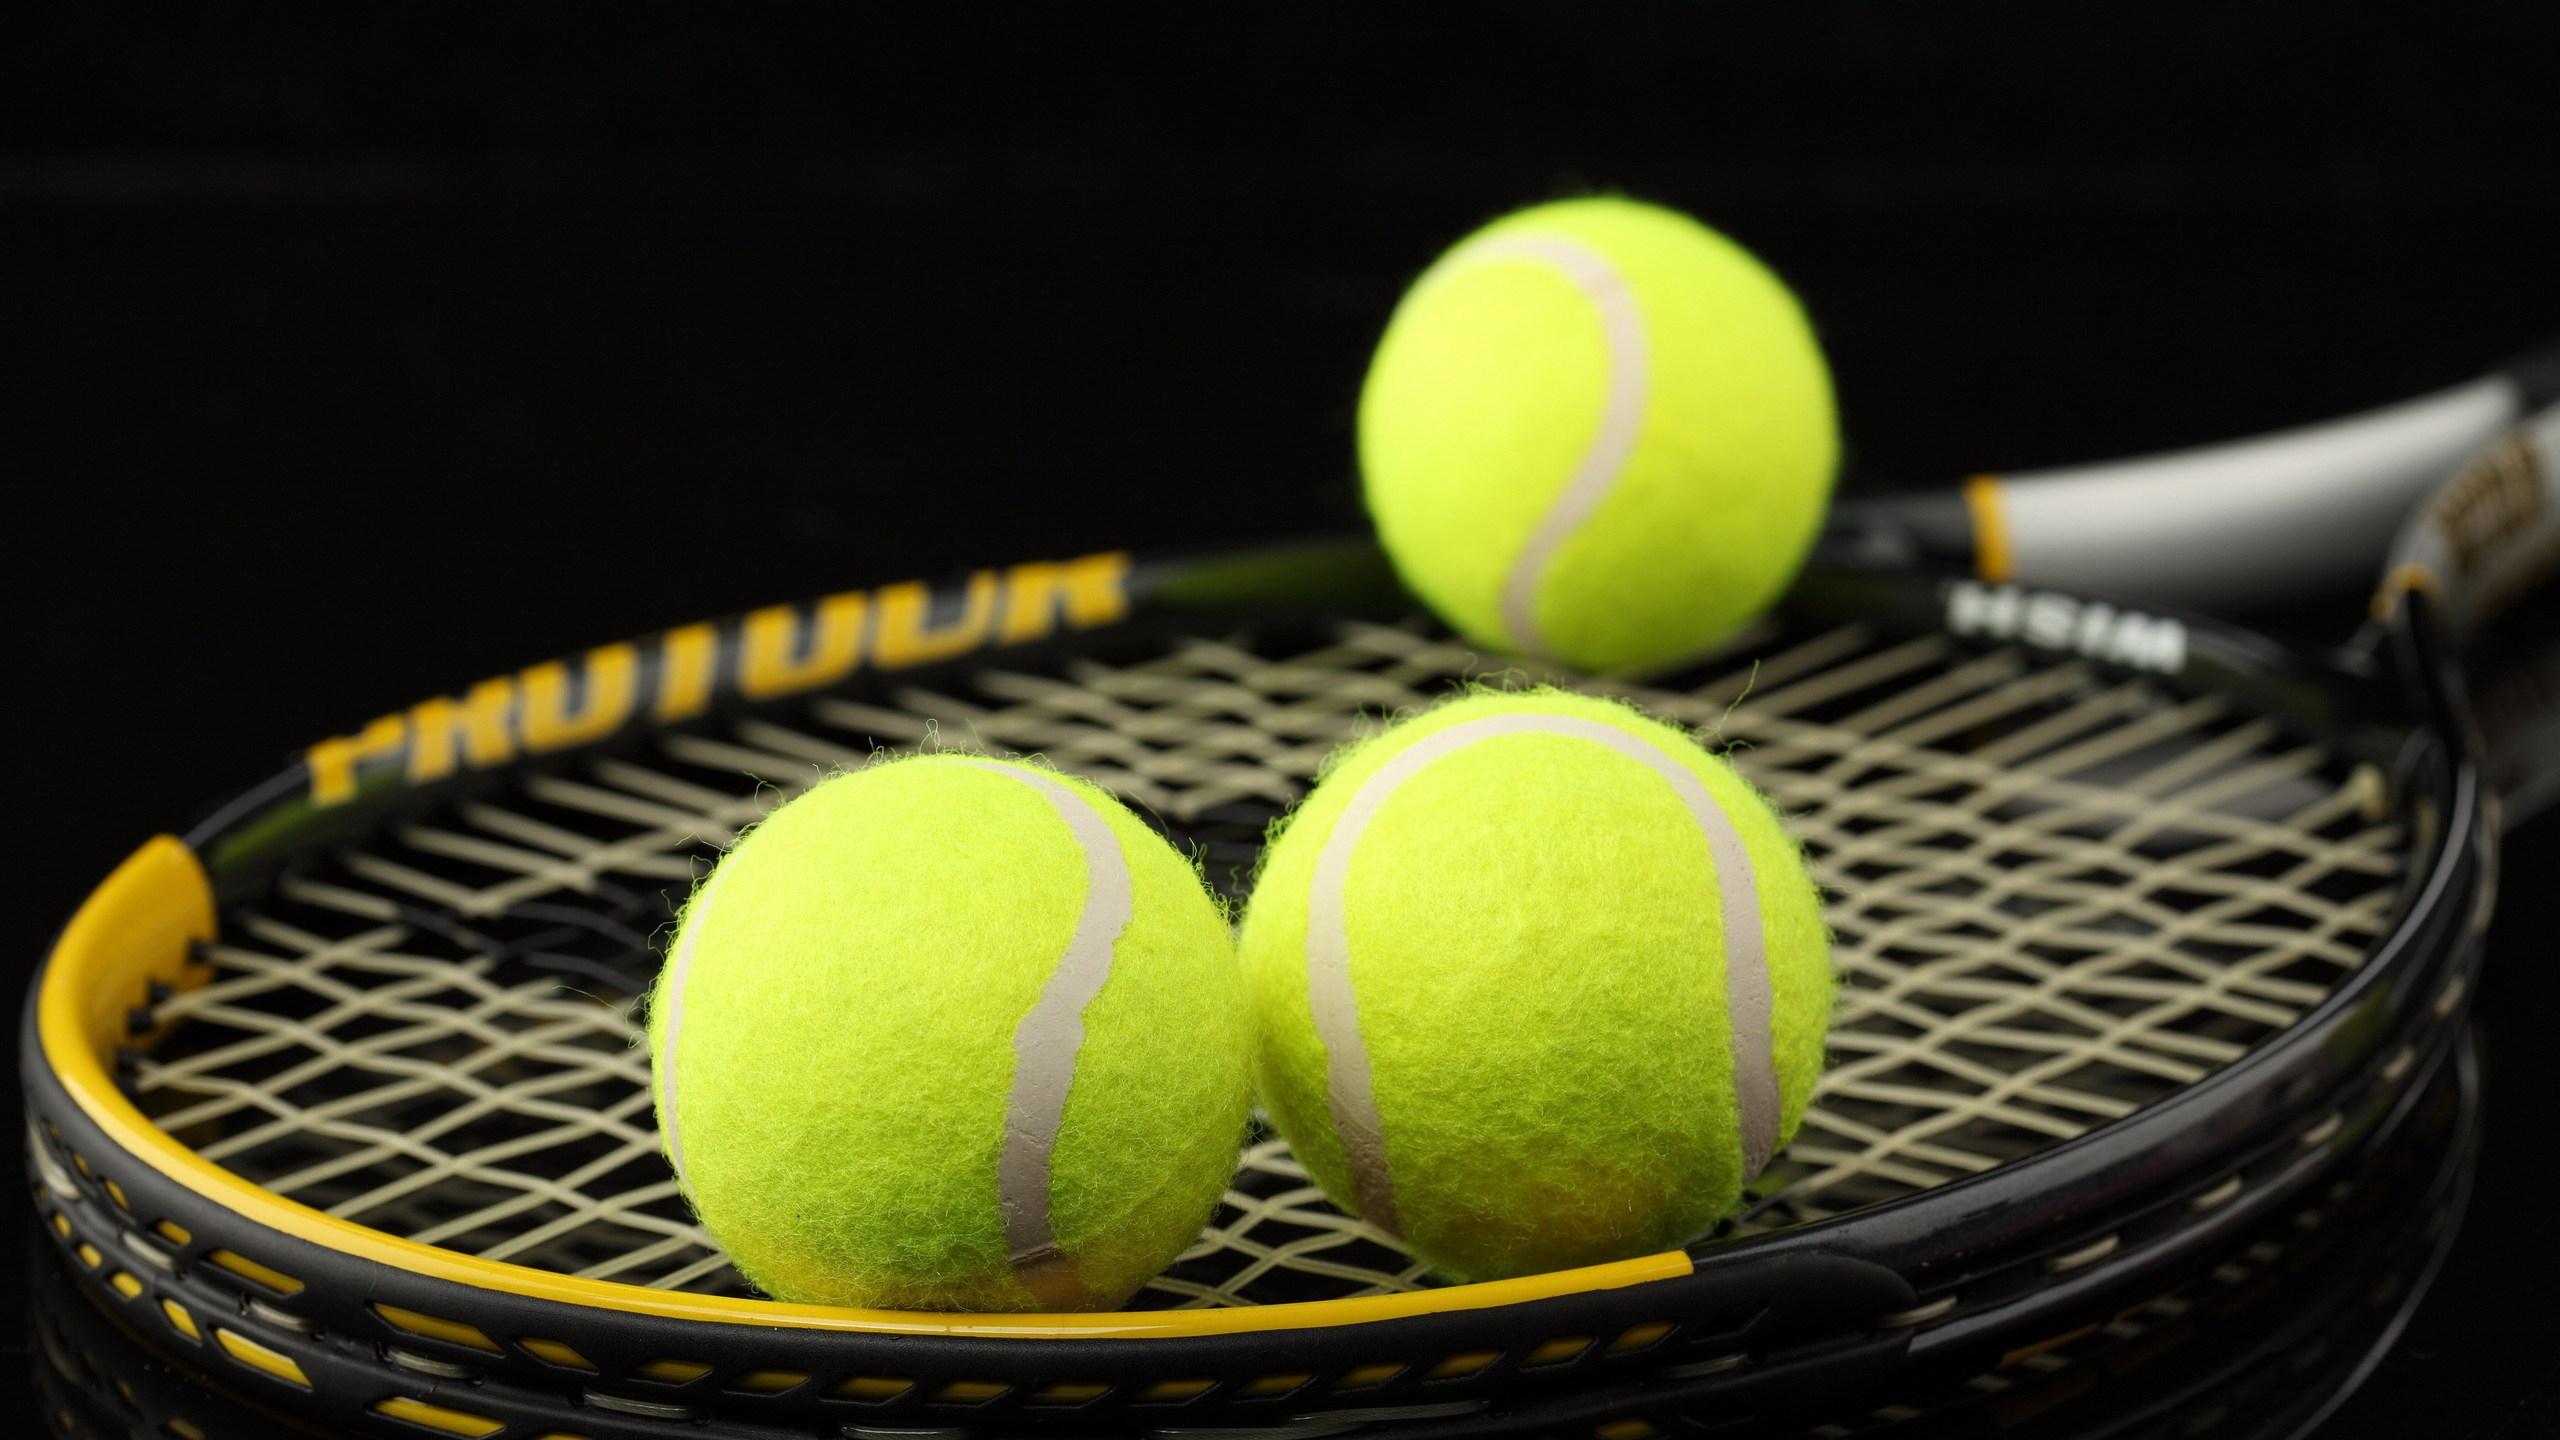 Tennis Balls for 2560x1440 HDTV resolution